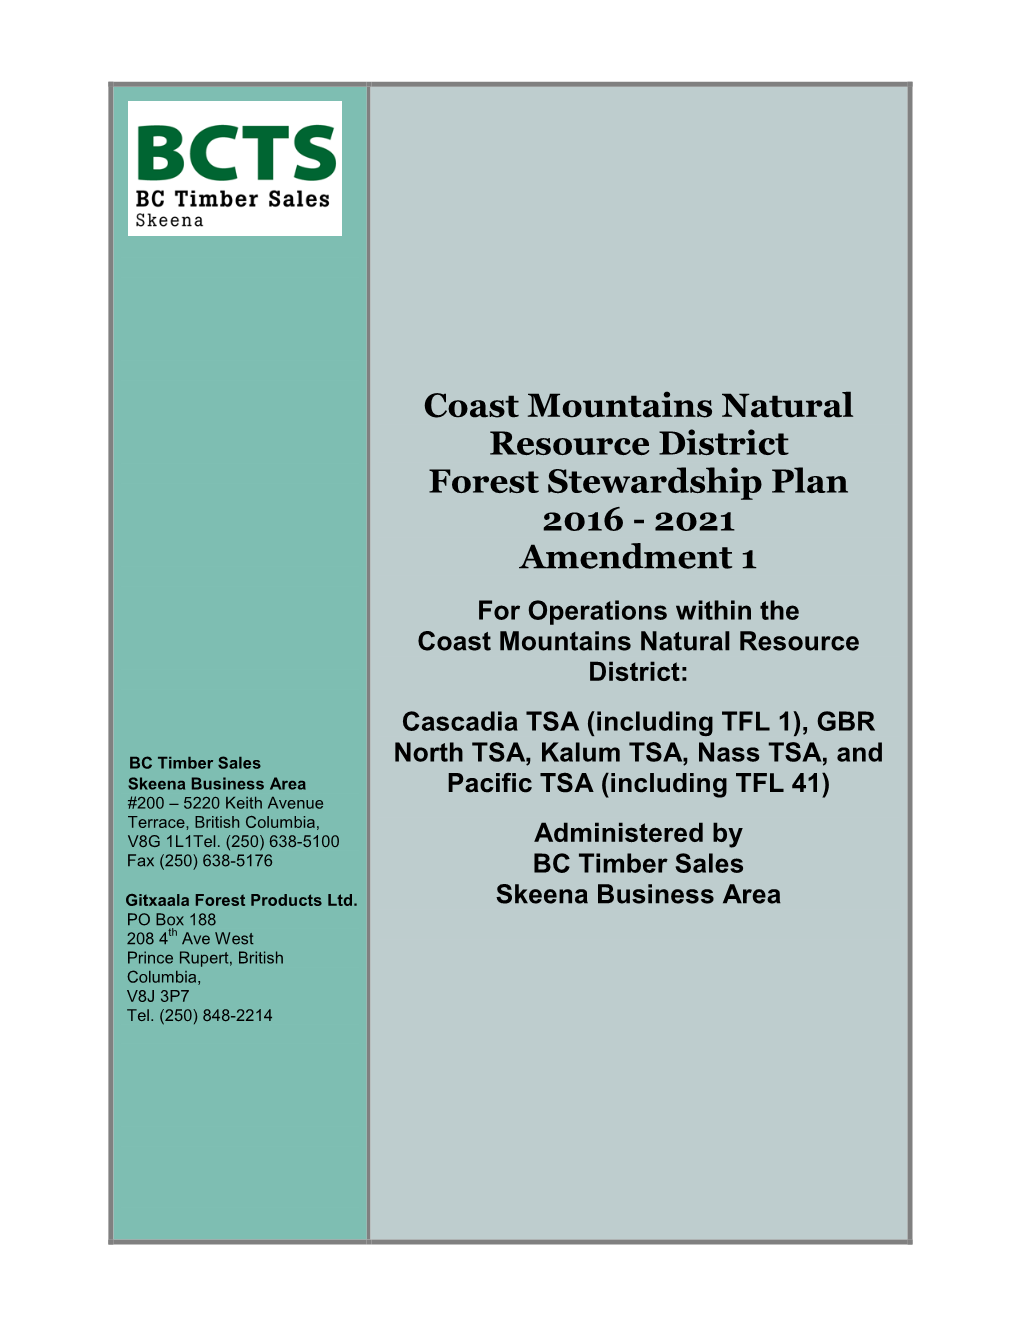 Coast Mountains Natural Resource District Forest Stewardship Plan 2016-2021 Amendment 1